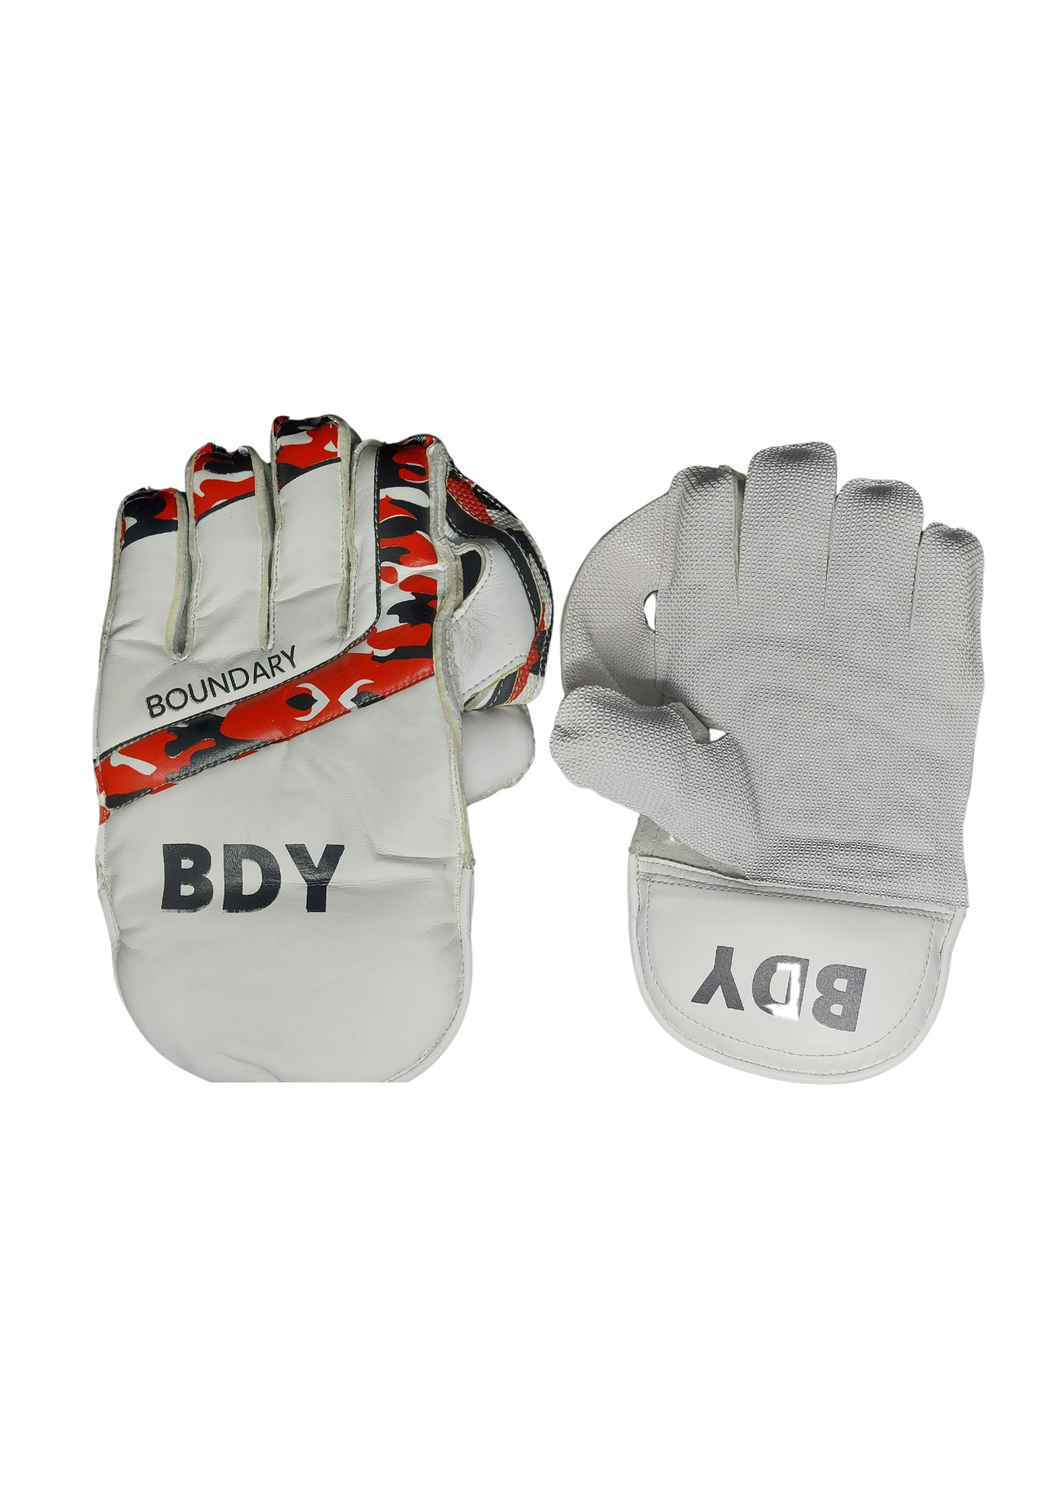 BDY Wicket Keeping Gloves